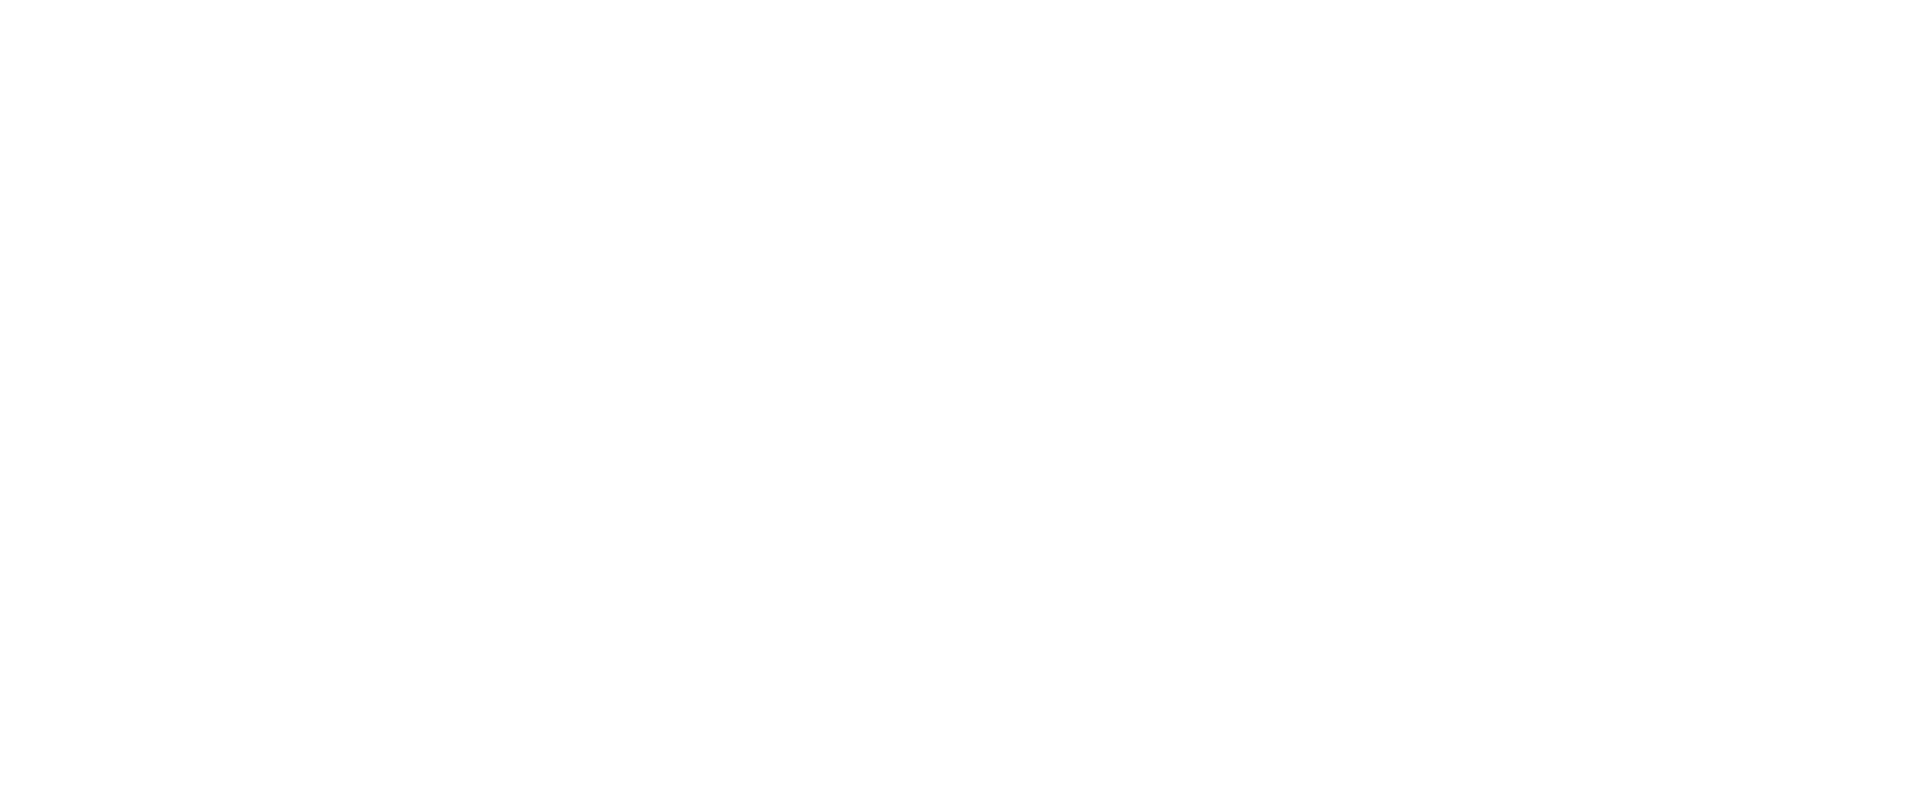 SATT_PARIS-SACLAY_white